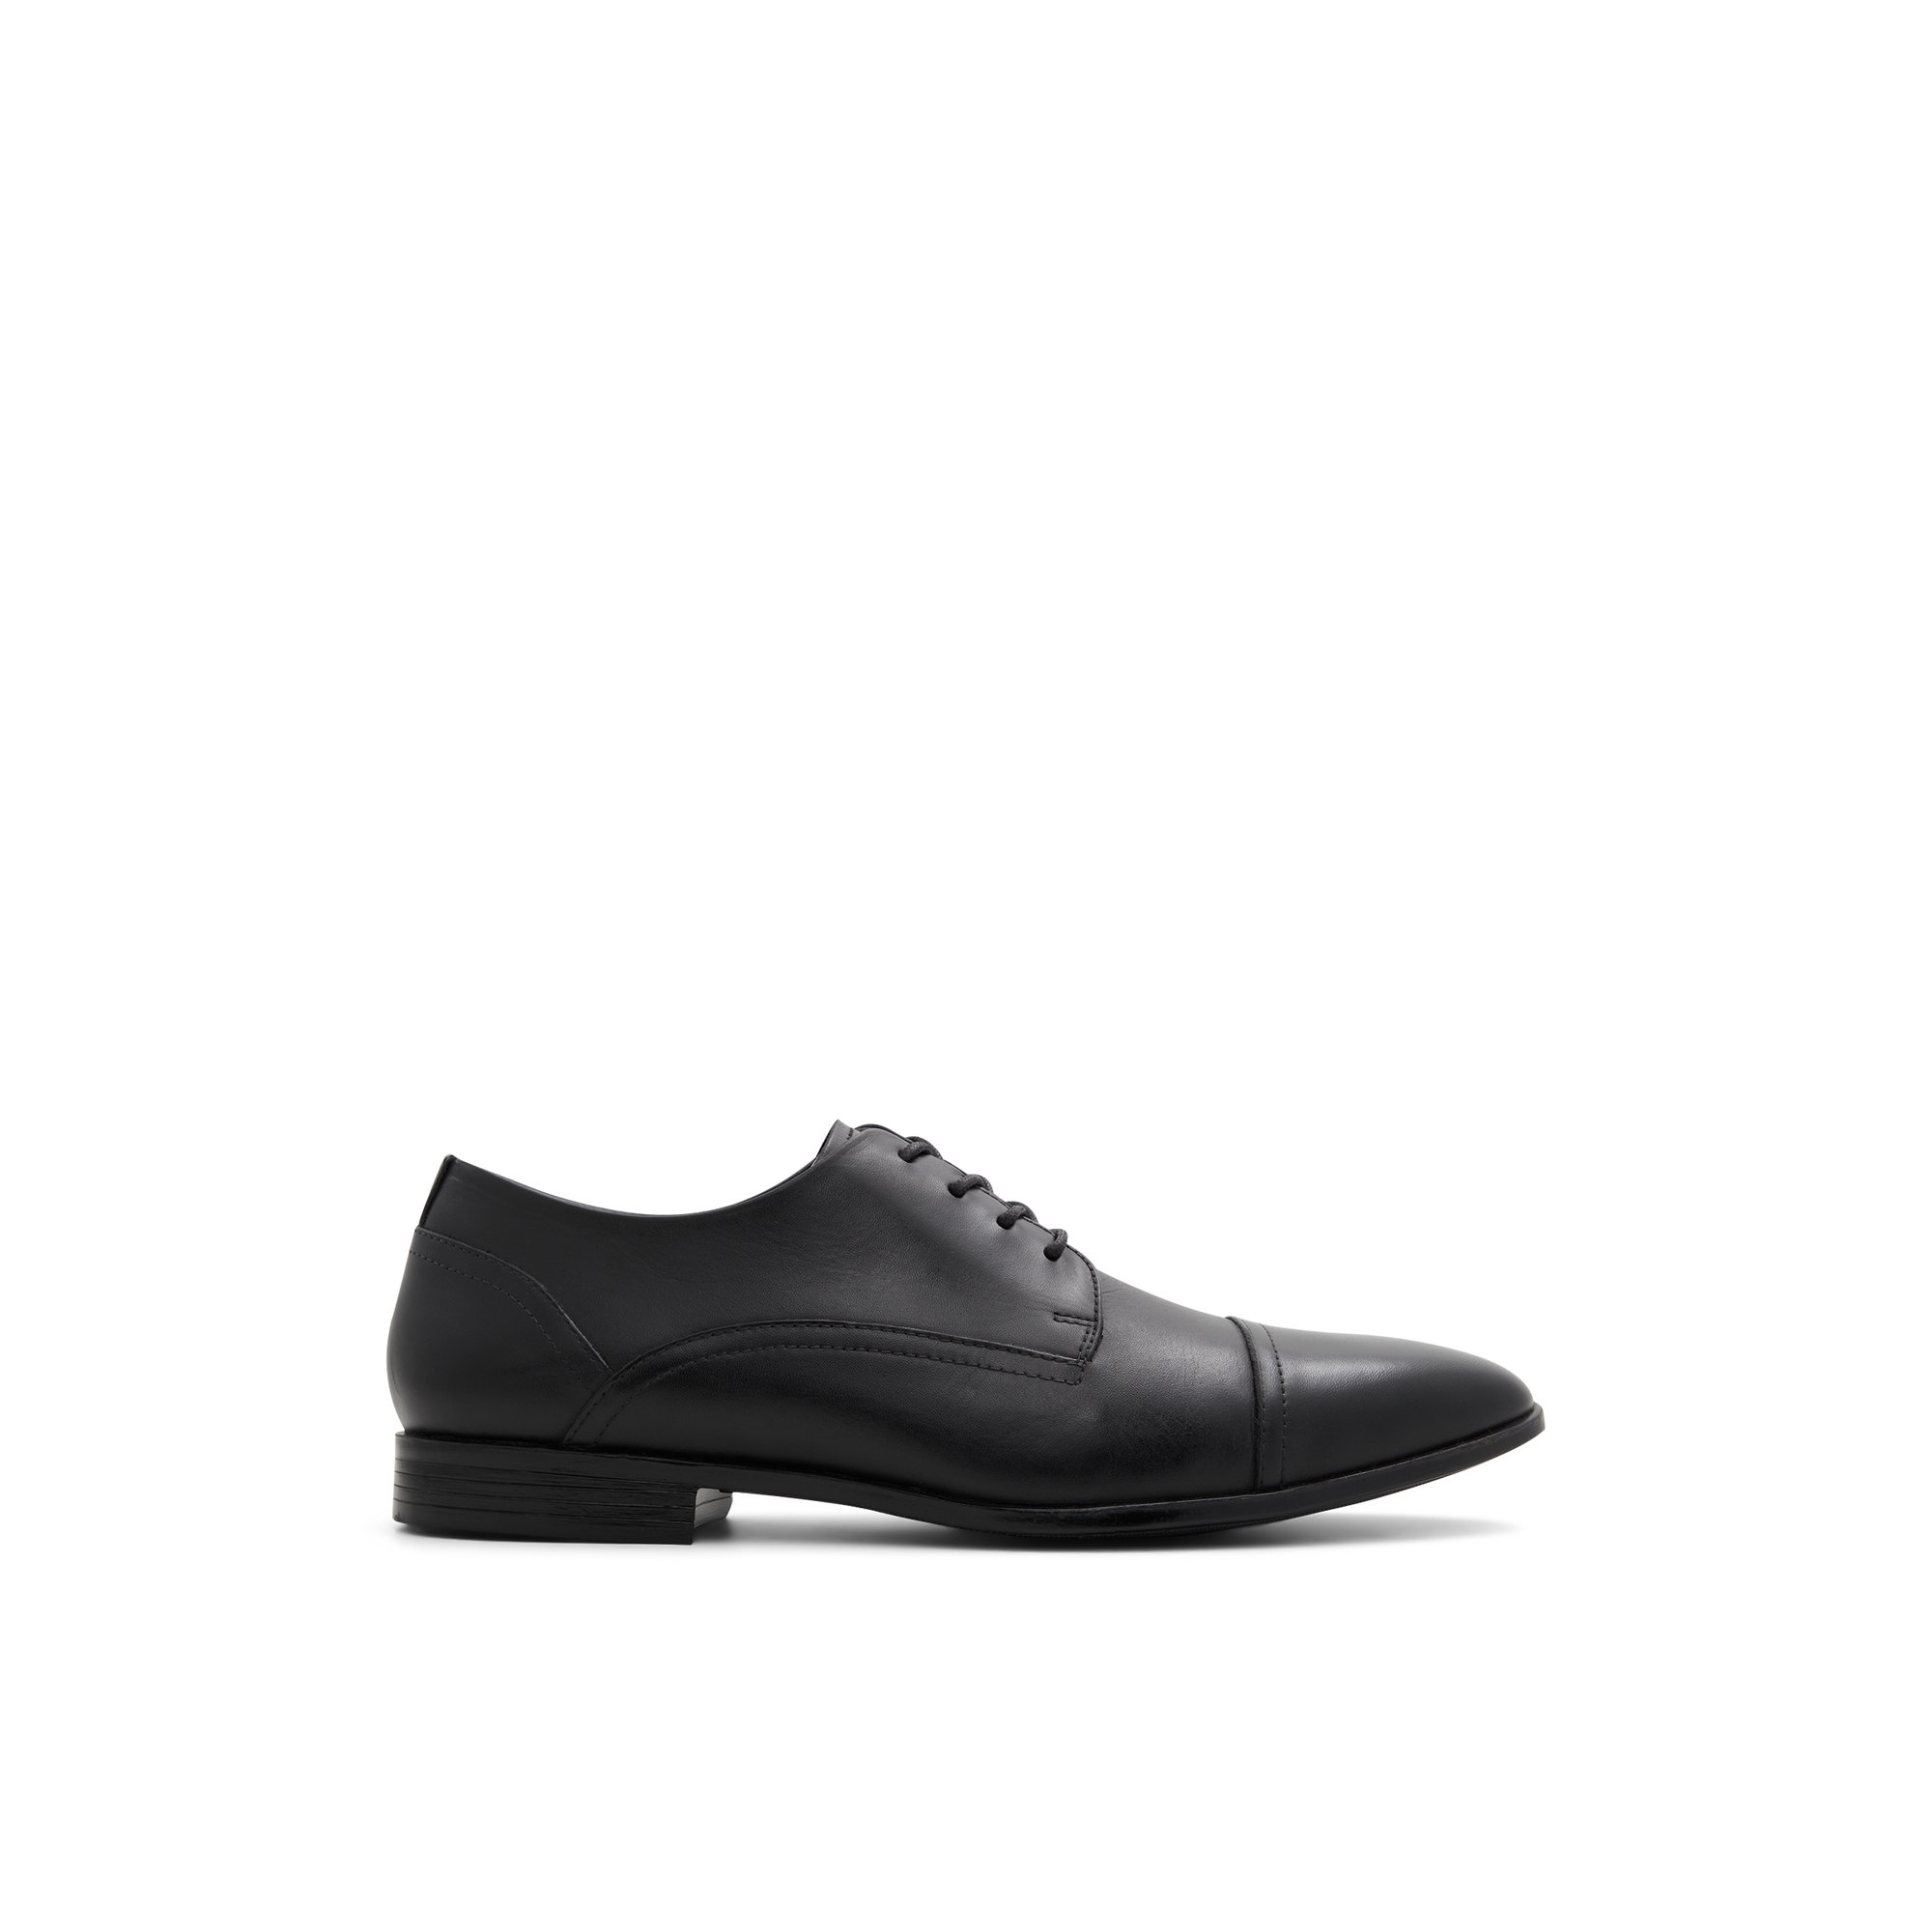 ALDO Cadigok - Men's Dress Shoe - Black